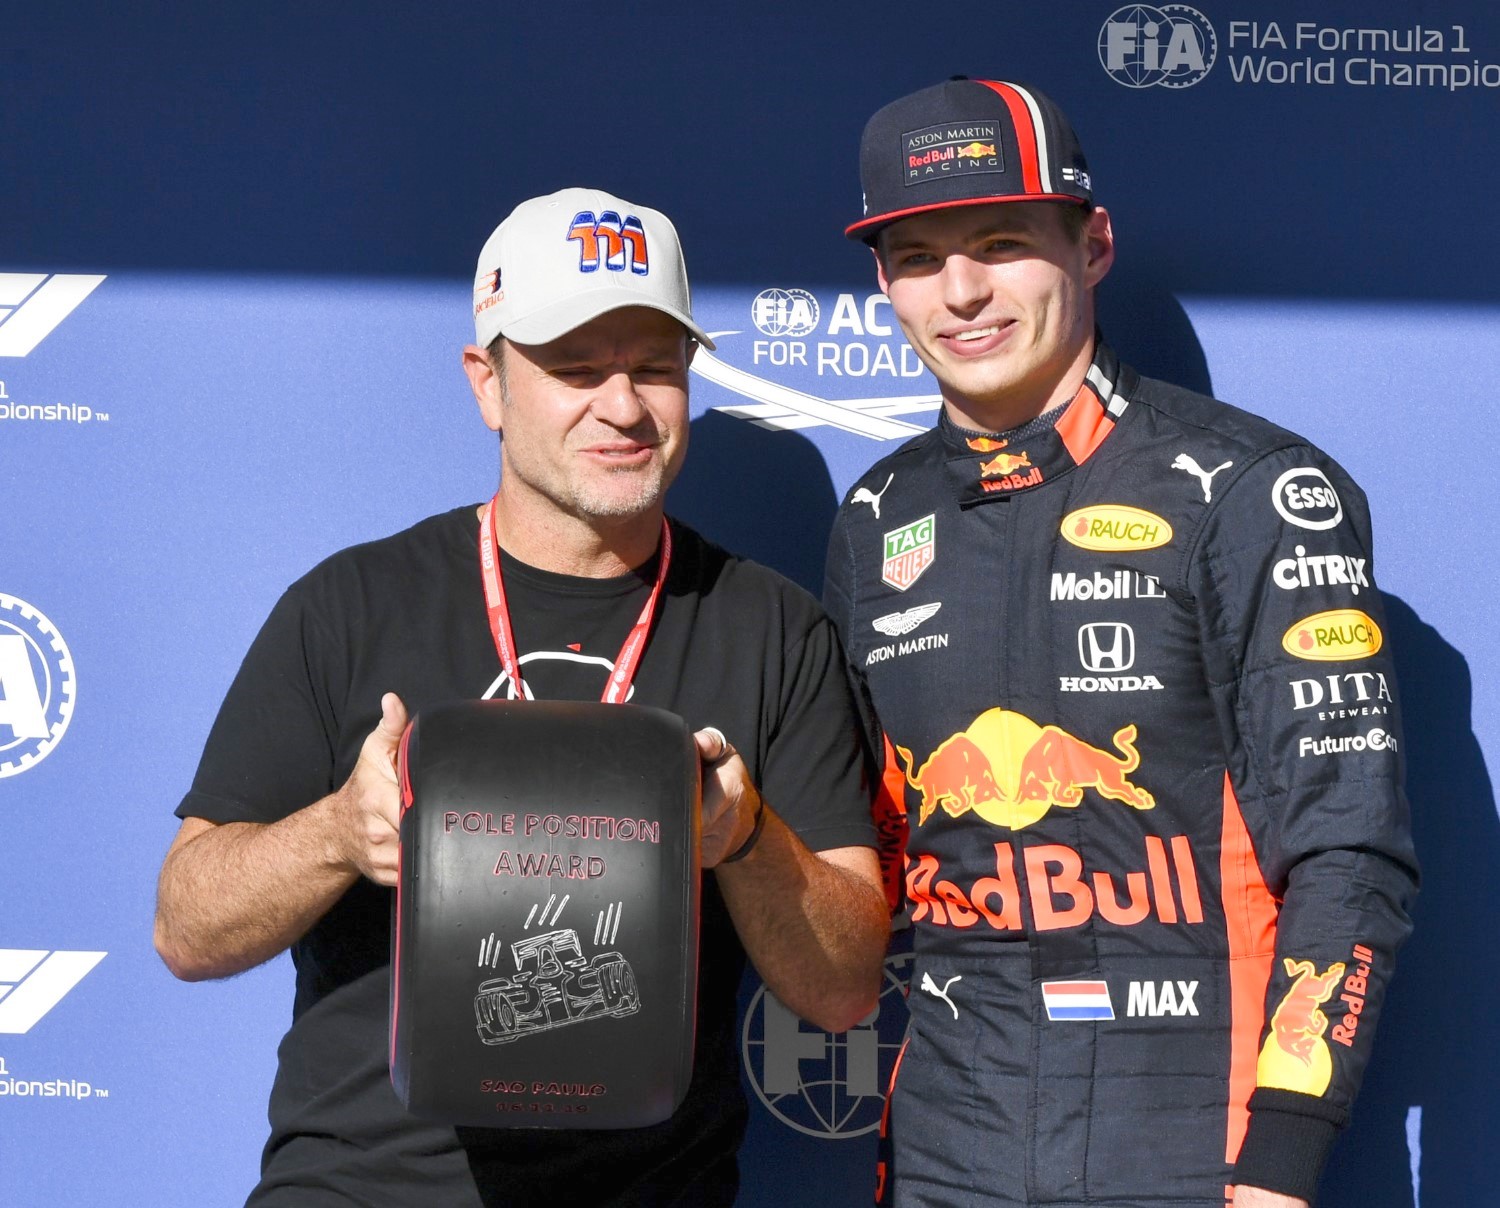 In Brazil Rubens Barrichello presented the pole award to Verstappen